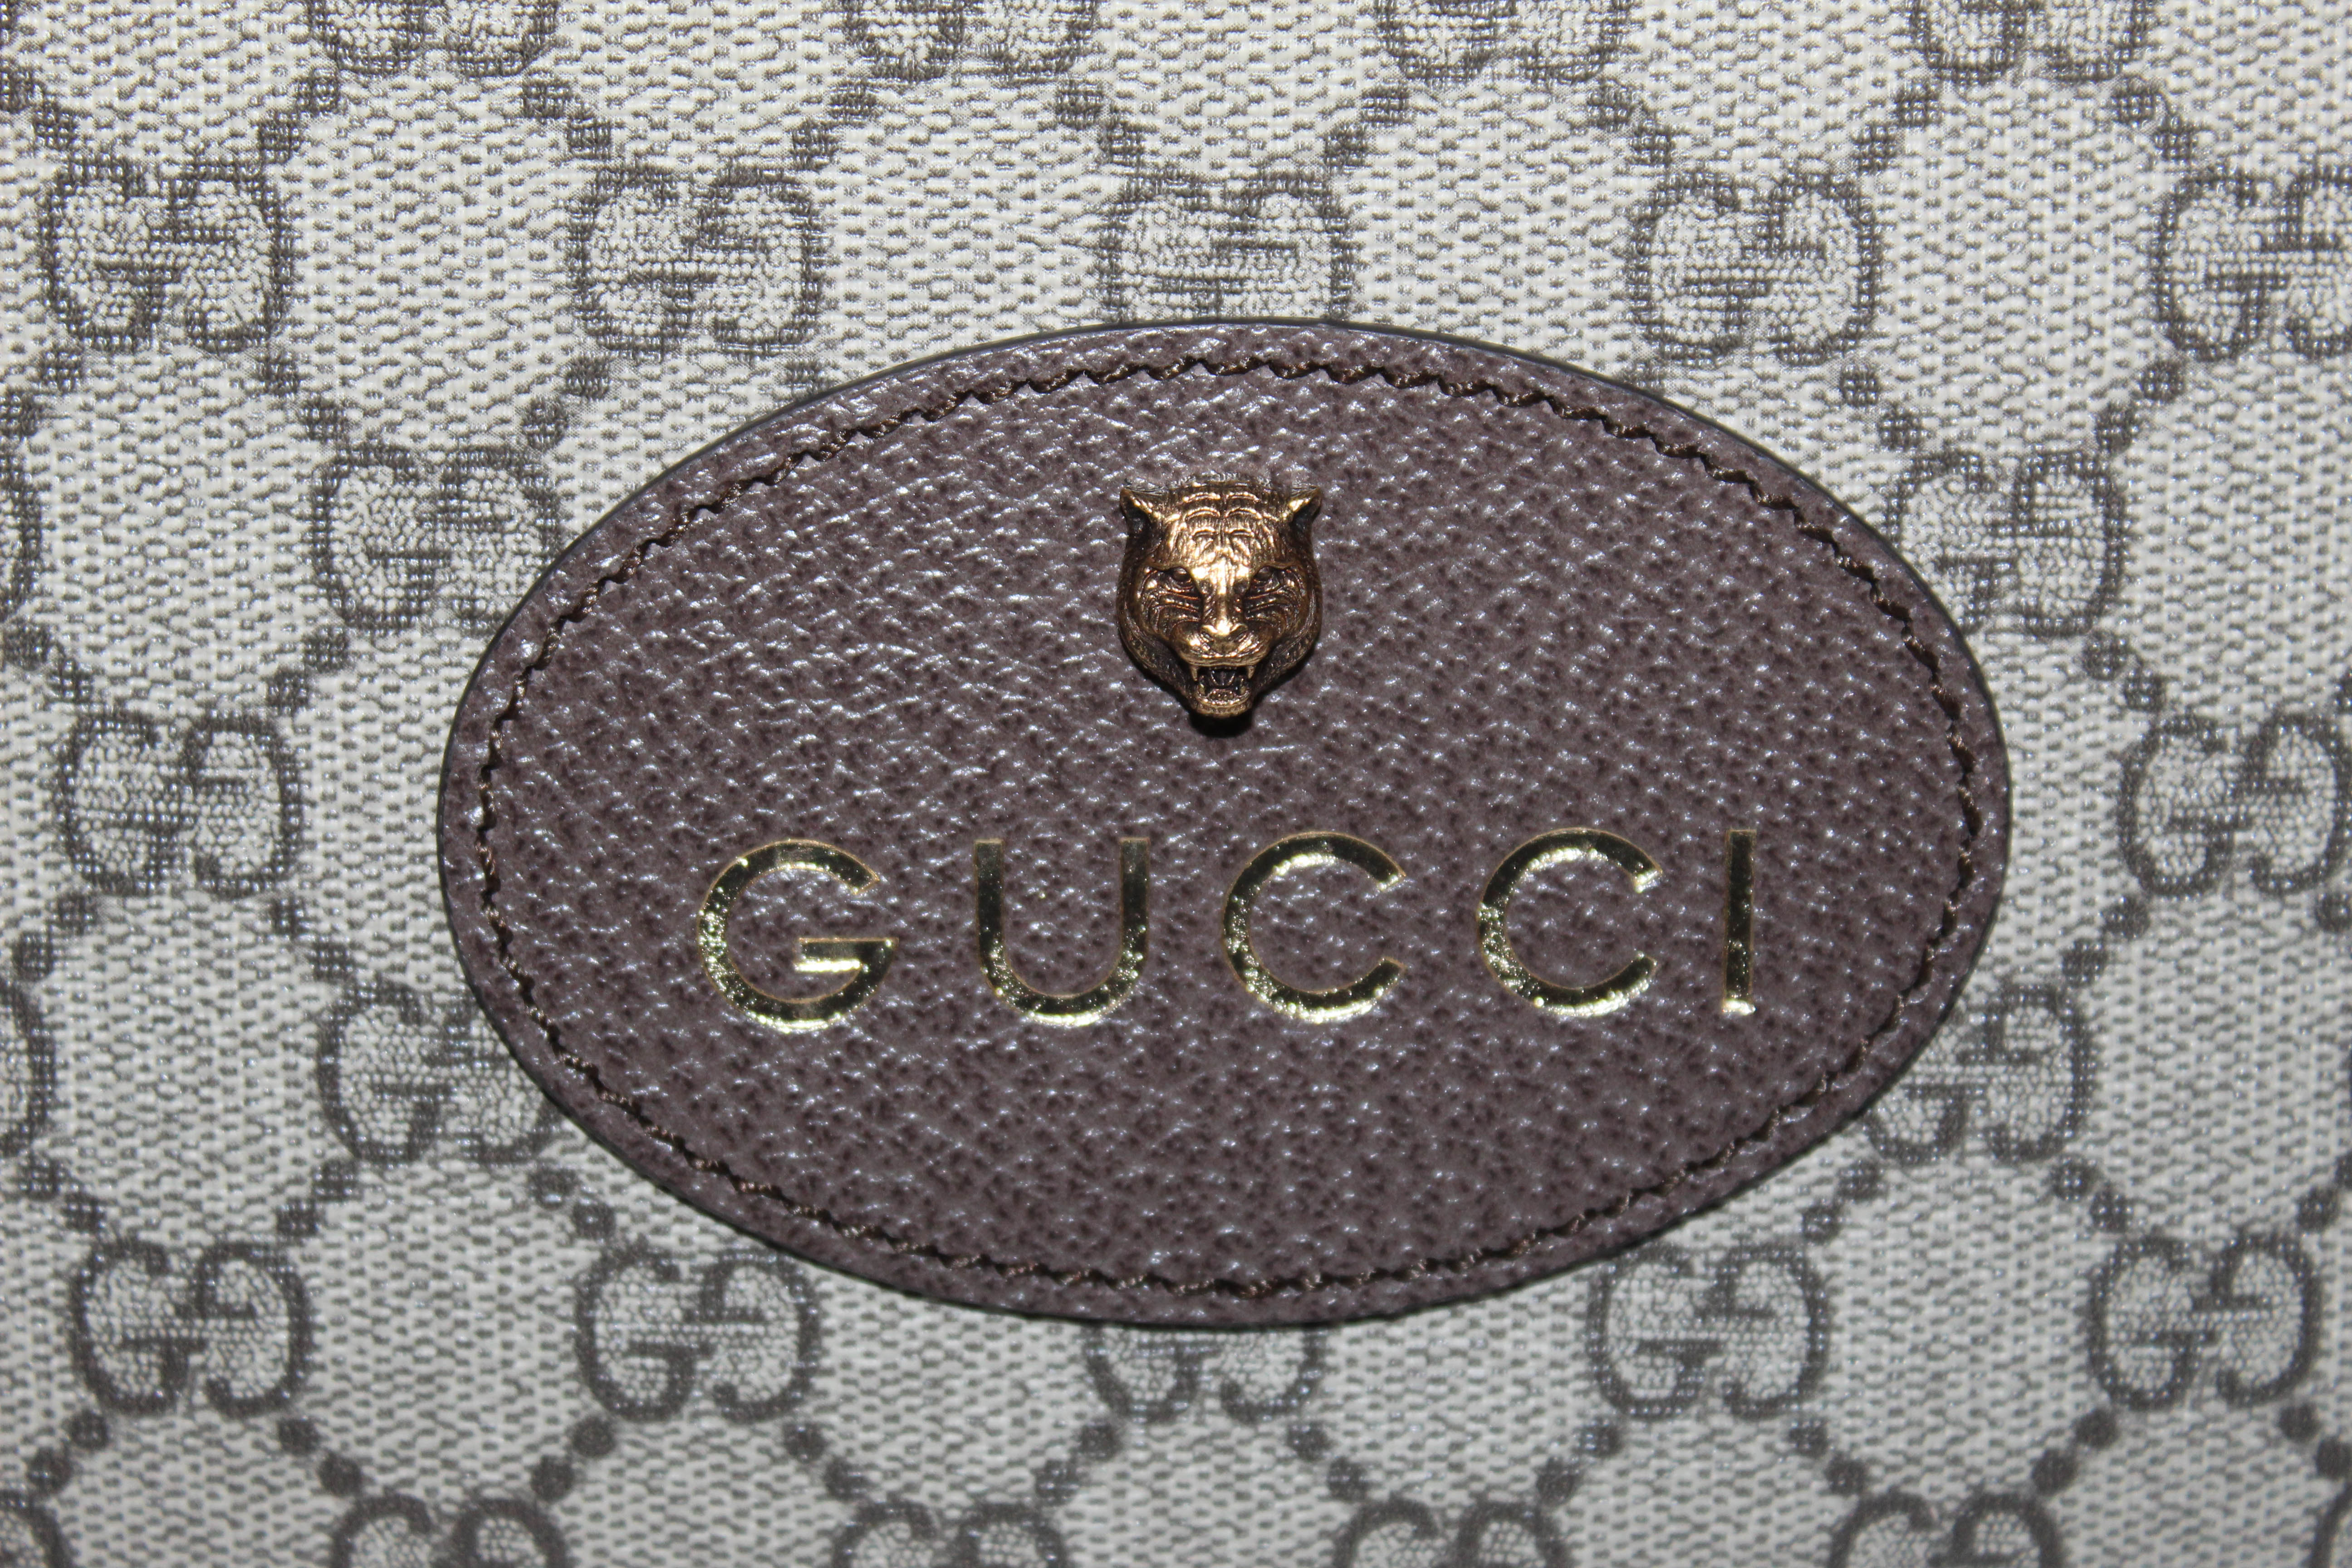 Authentic New Gucci Neo Vintage GG Supreme Messenger Bag